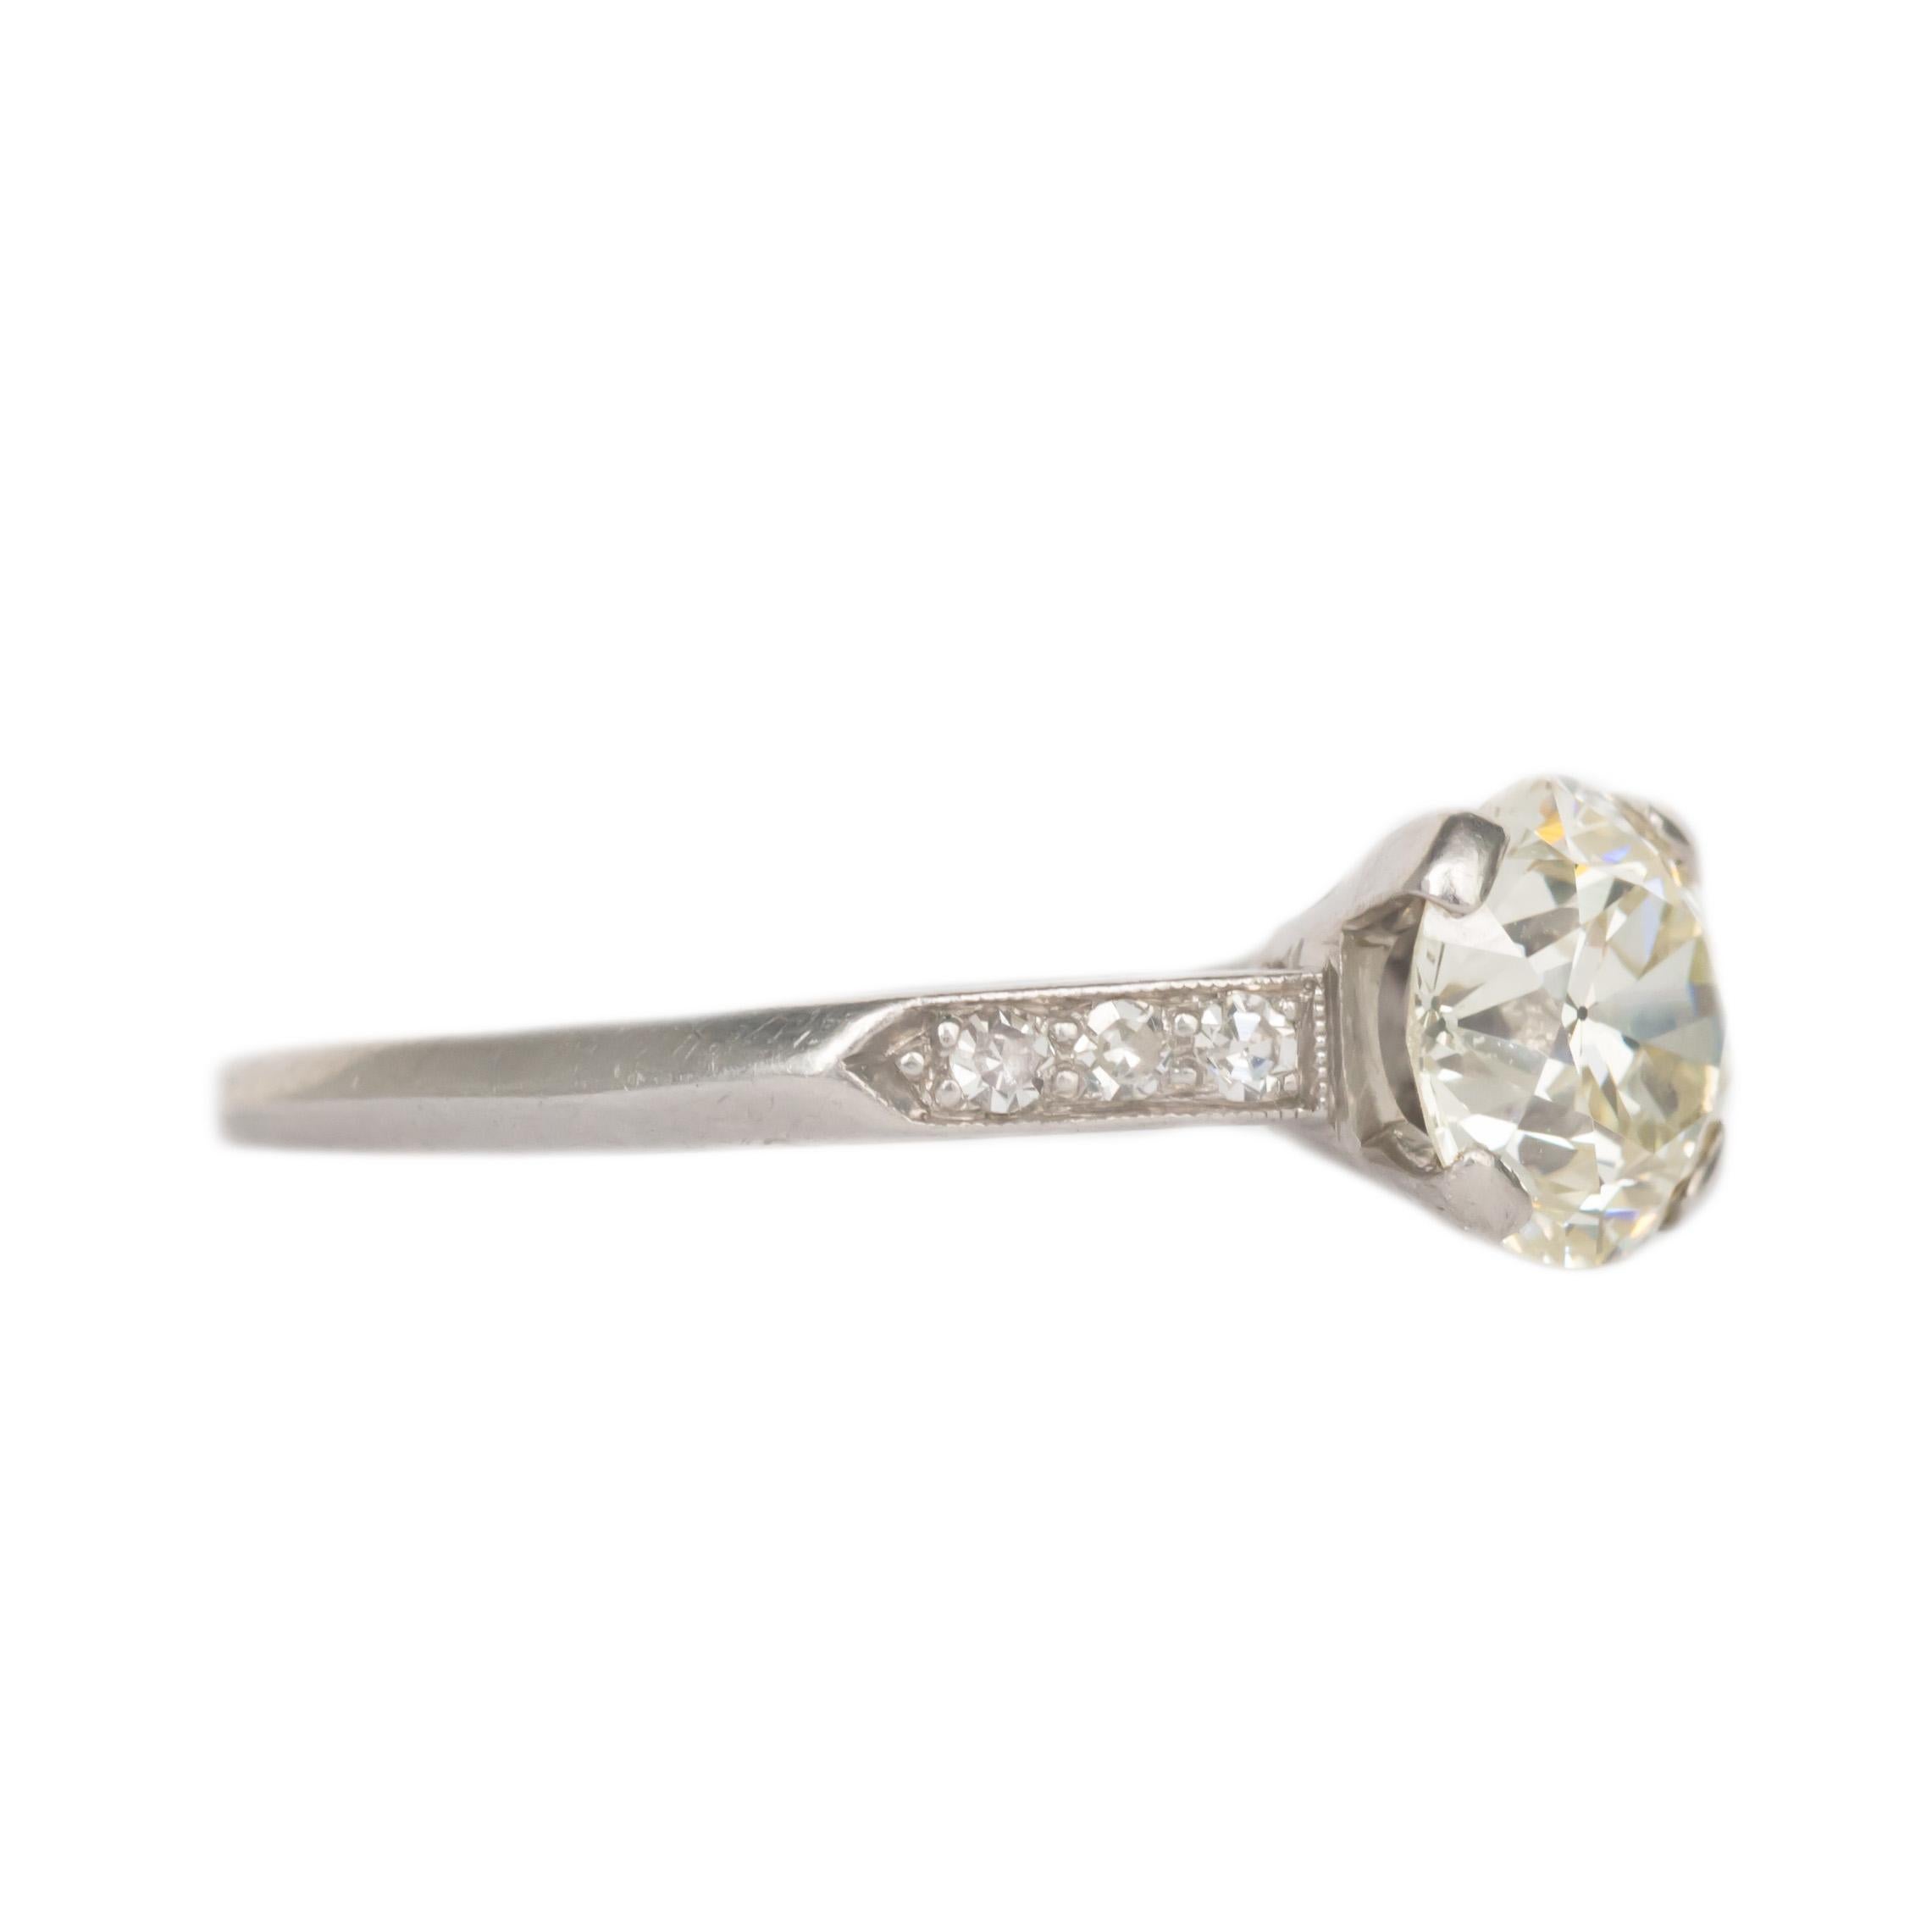 1.15 carat diamond ring